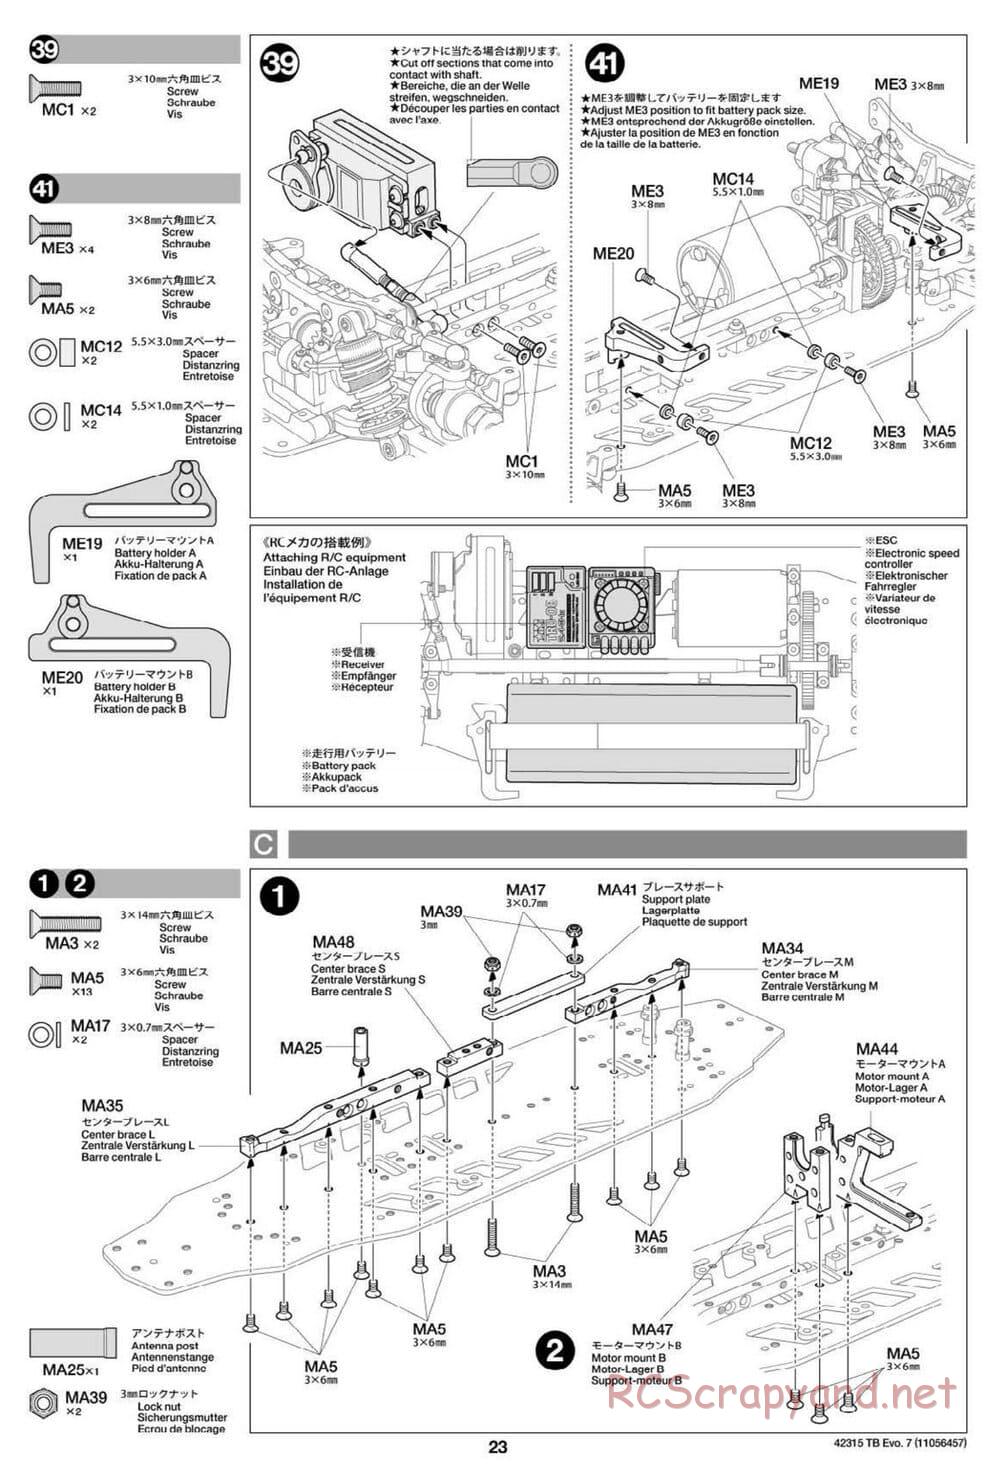 Tamiya - TB Evo.7 Chassis - Manual - Page 23